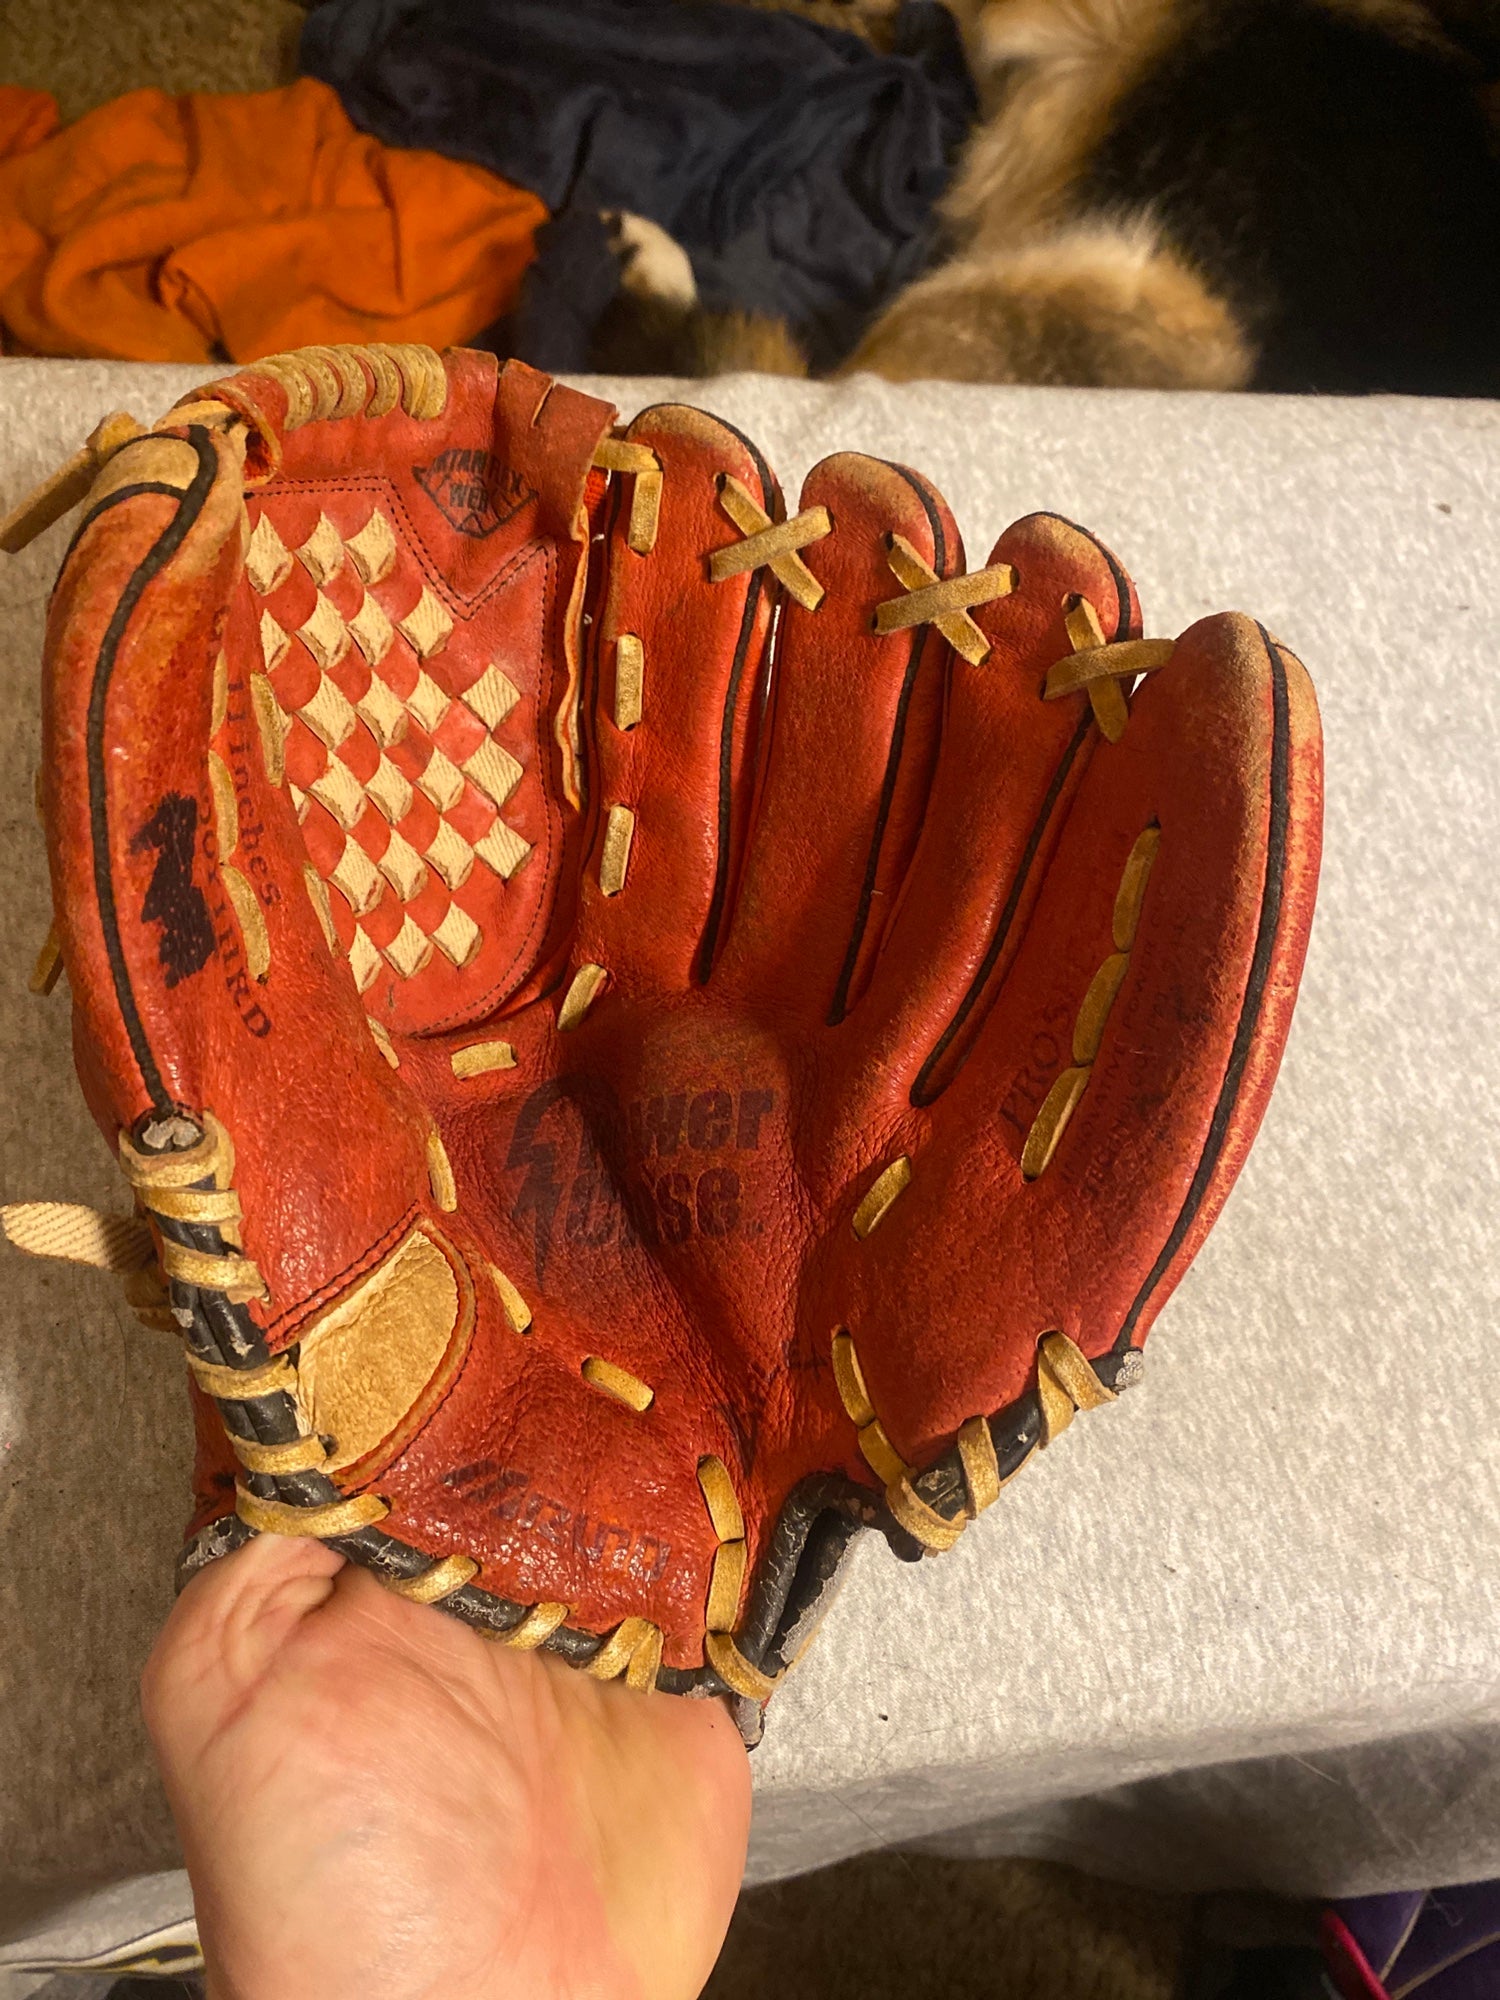 SSK Professional Dimple Series 11.5 Javier Baez Baseball Glove: S18JB9